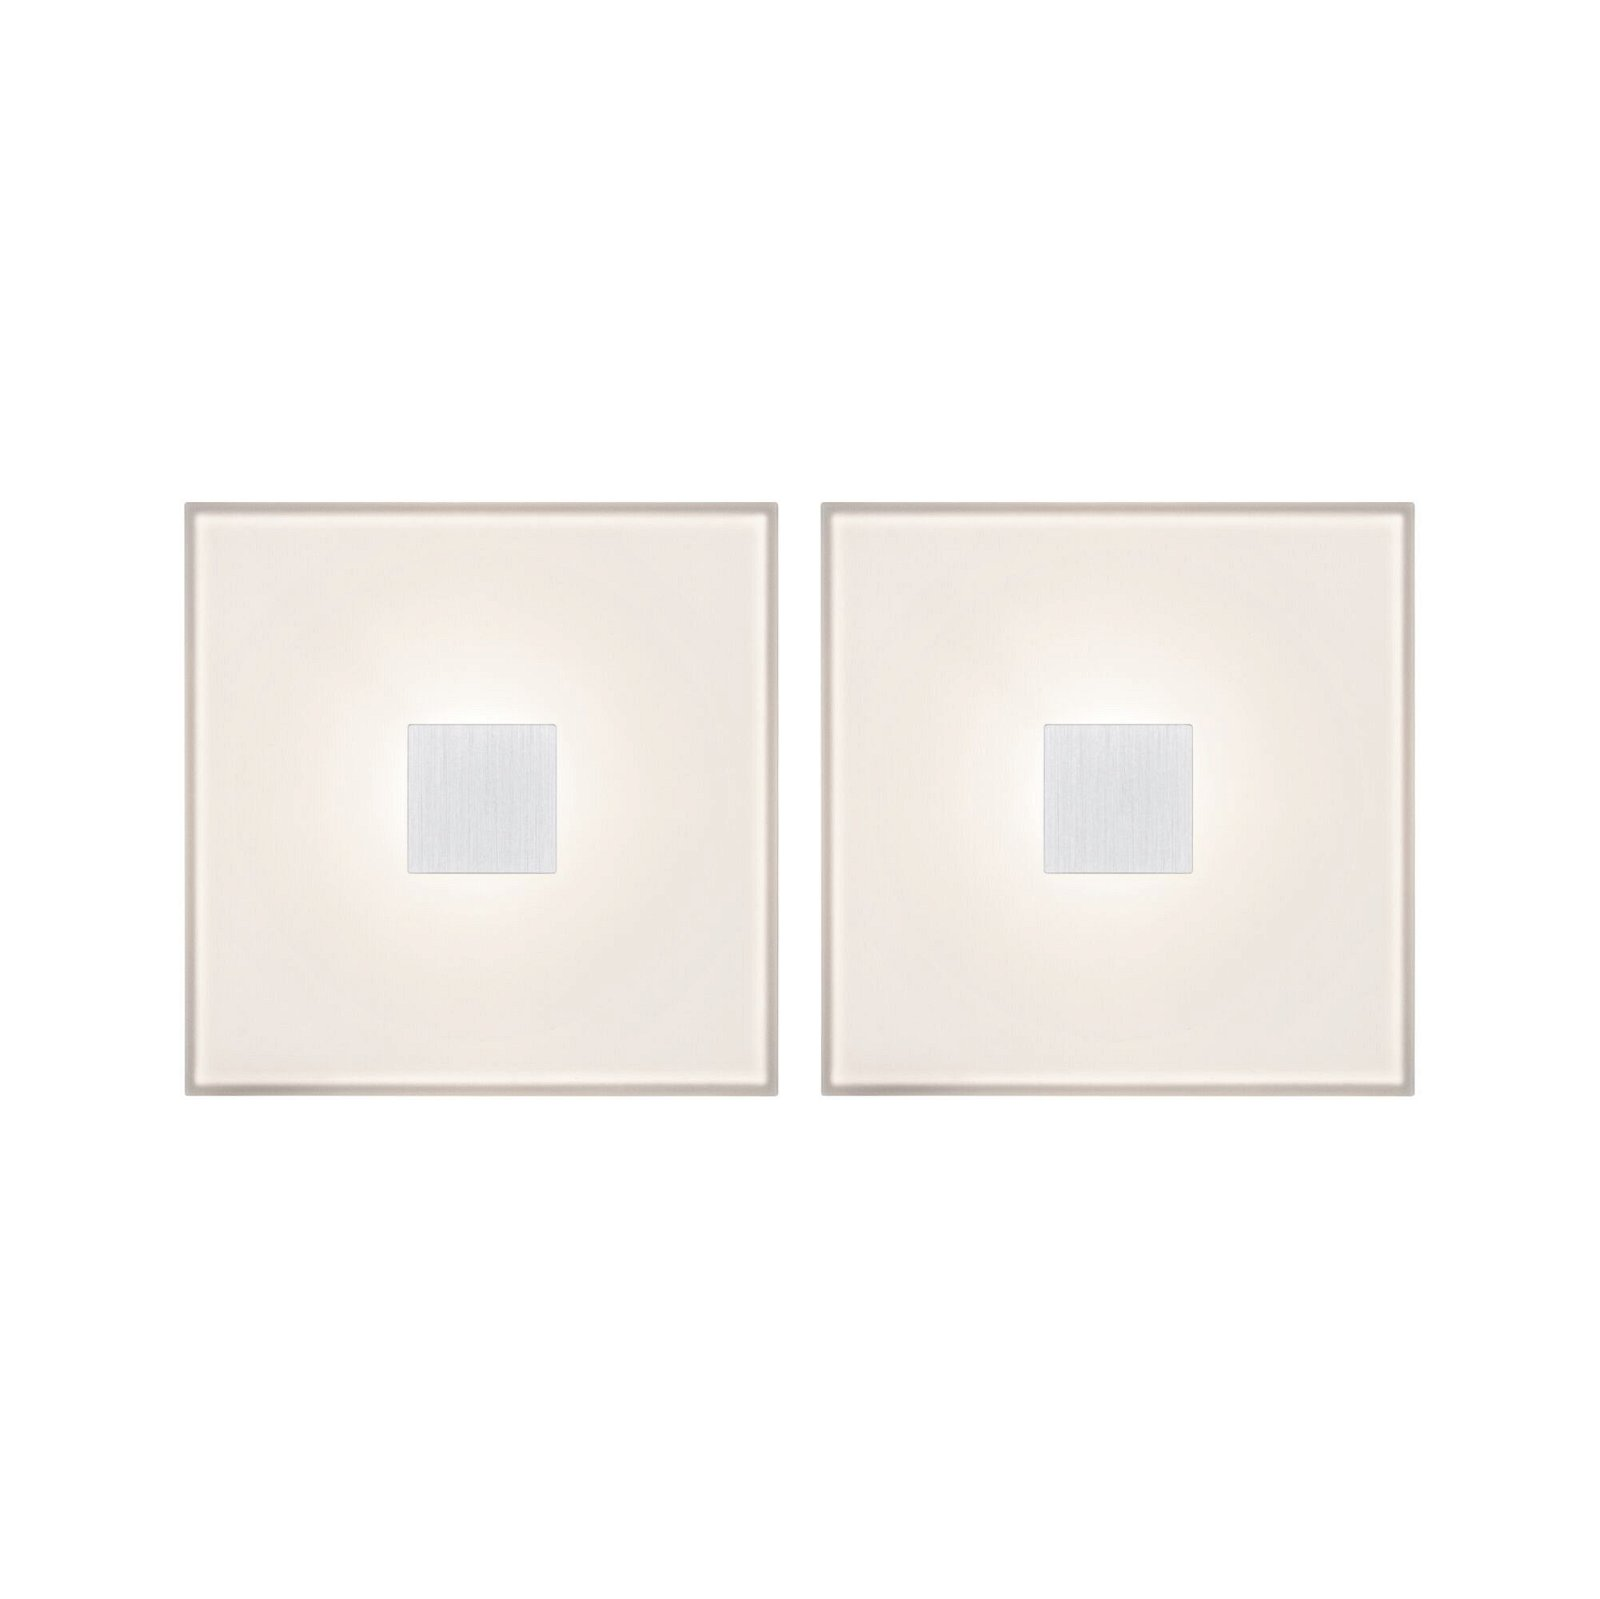 PAULMANN LICHT LumiTiles (78401) LED Tiles Warmweiß